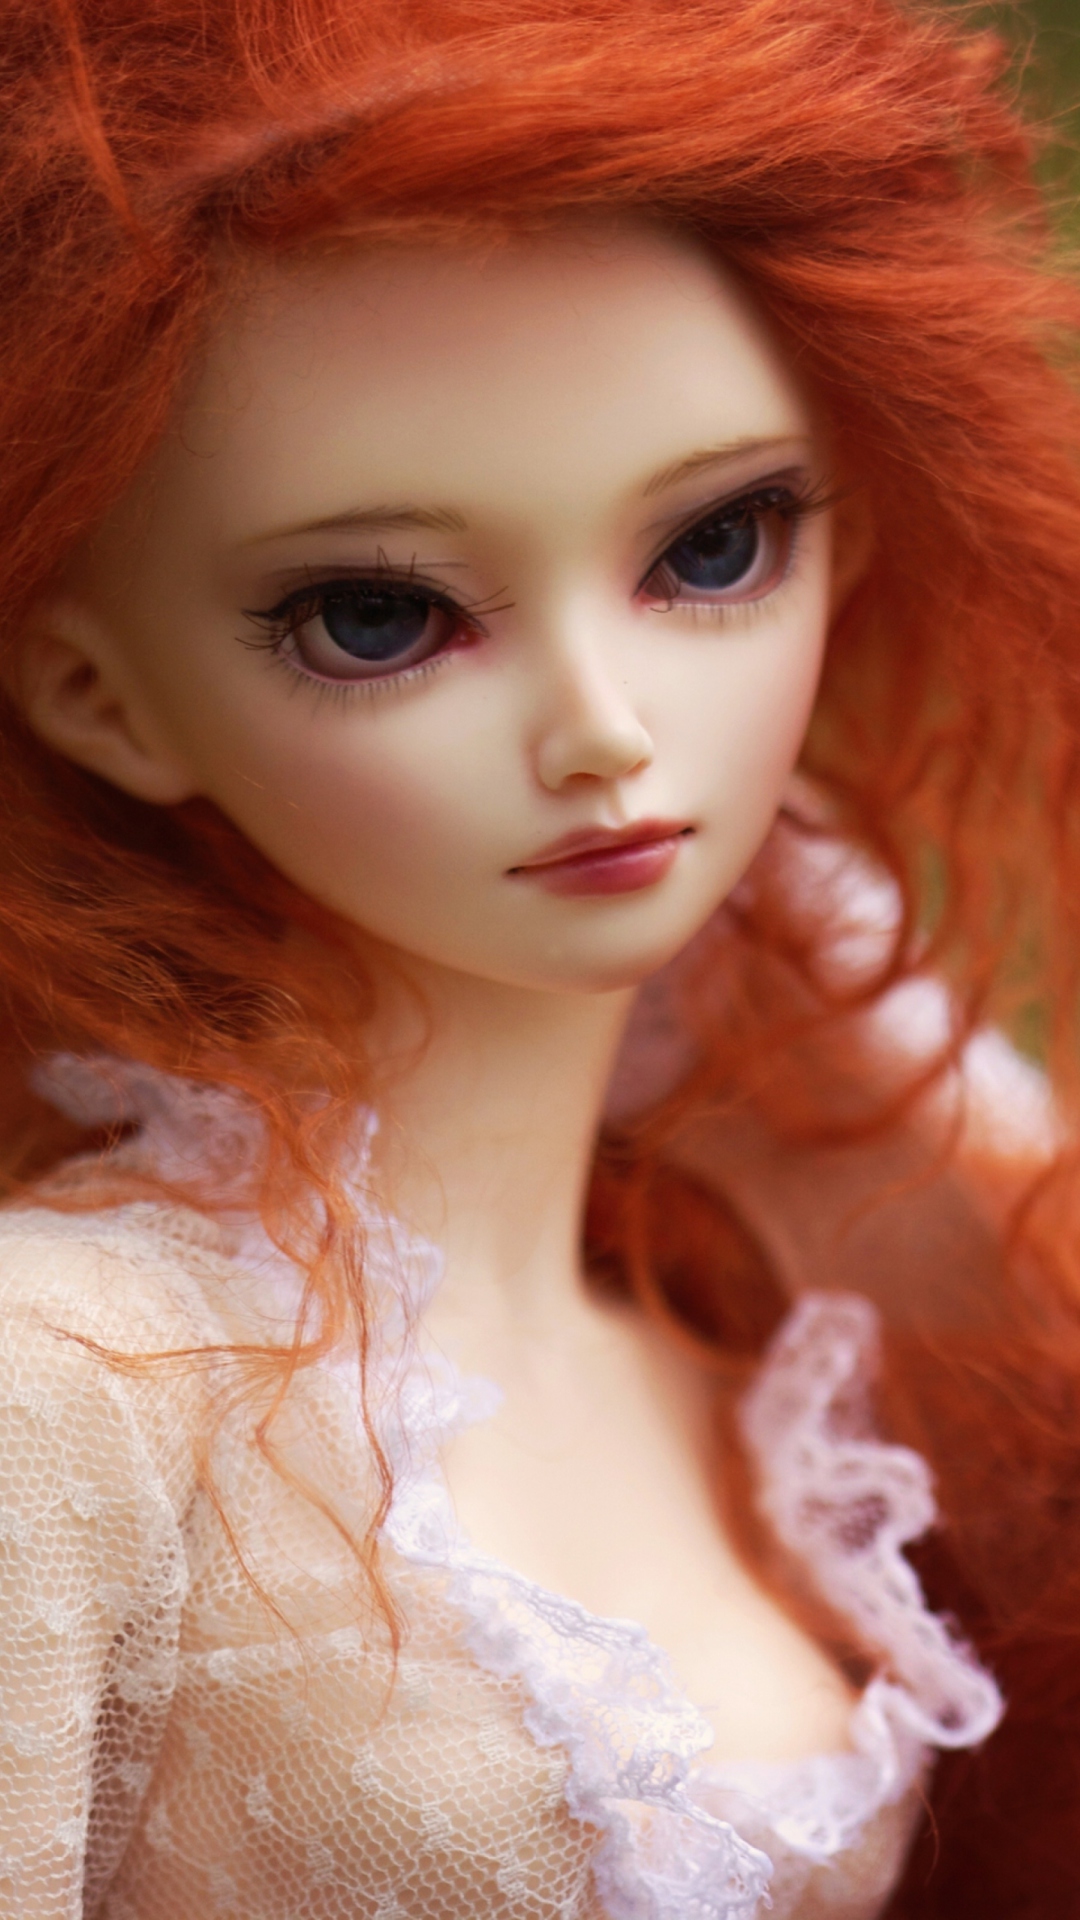 Gorgeous Redhead Doll With Sad Eyes wallpaper 1080x1920